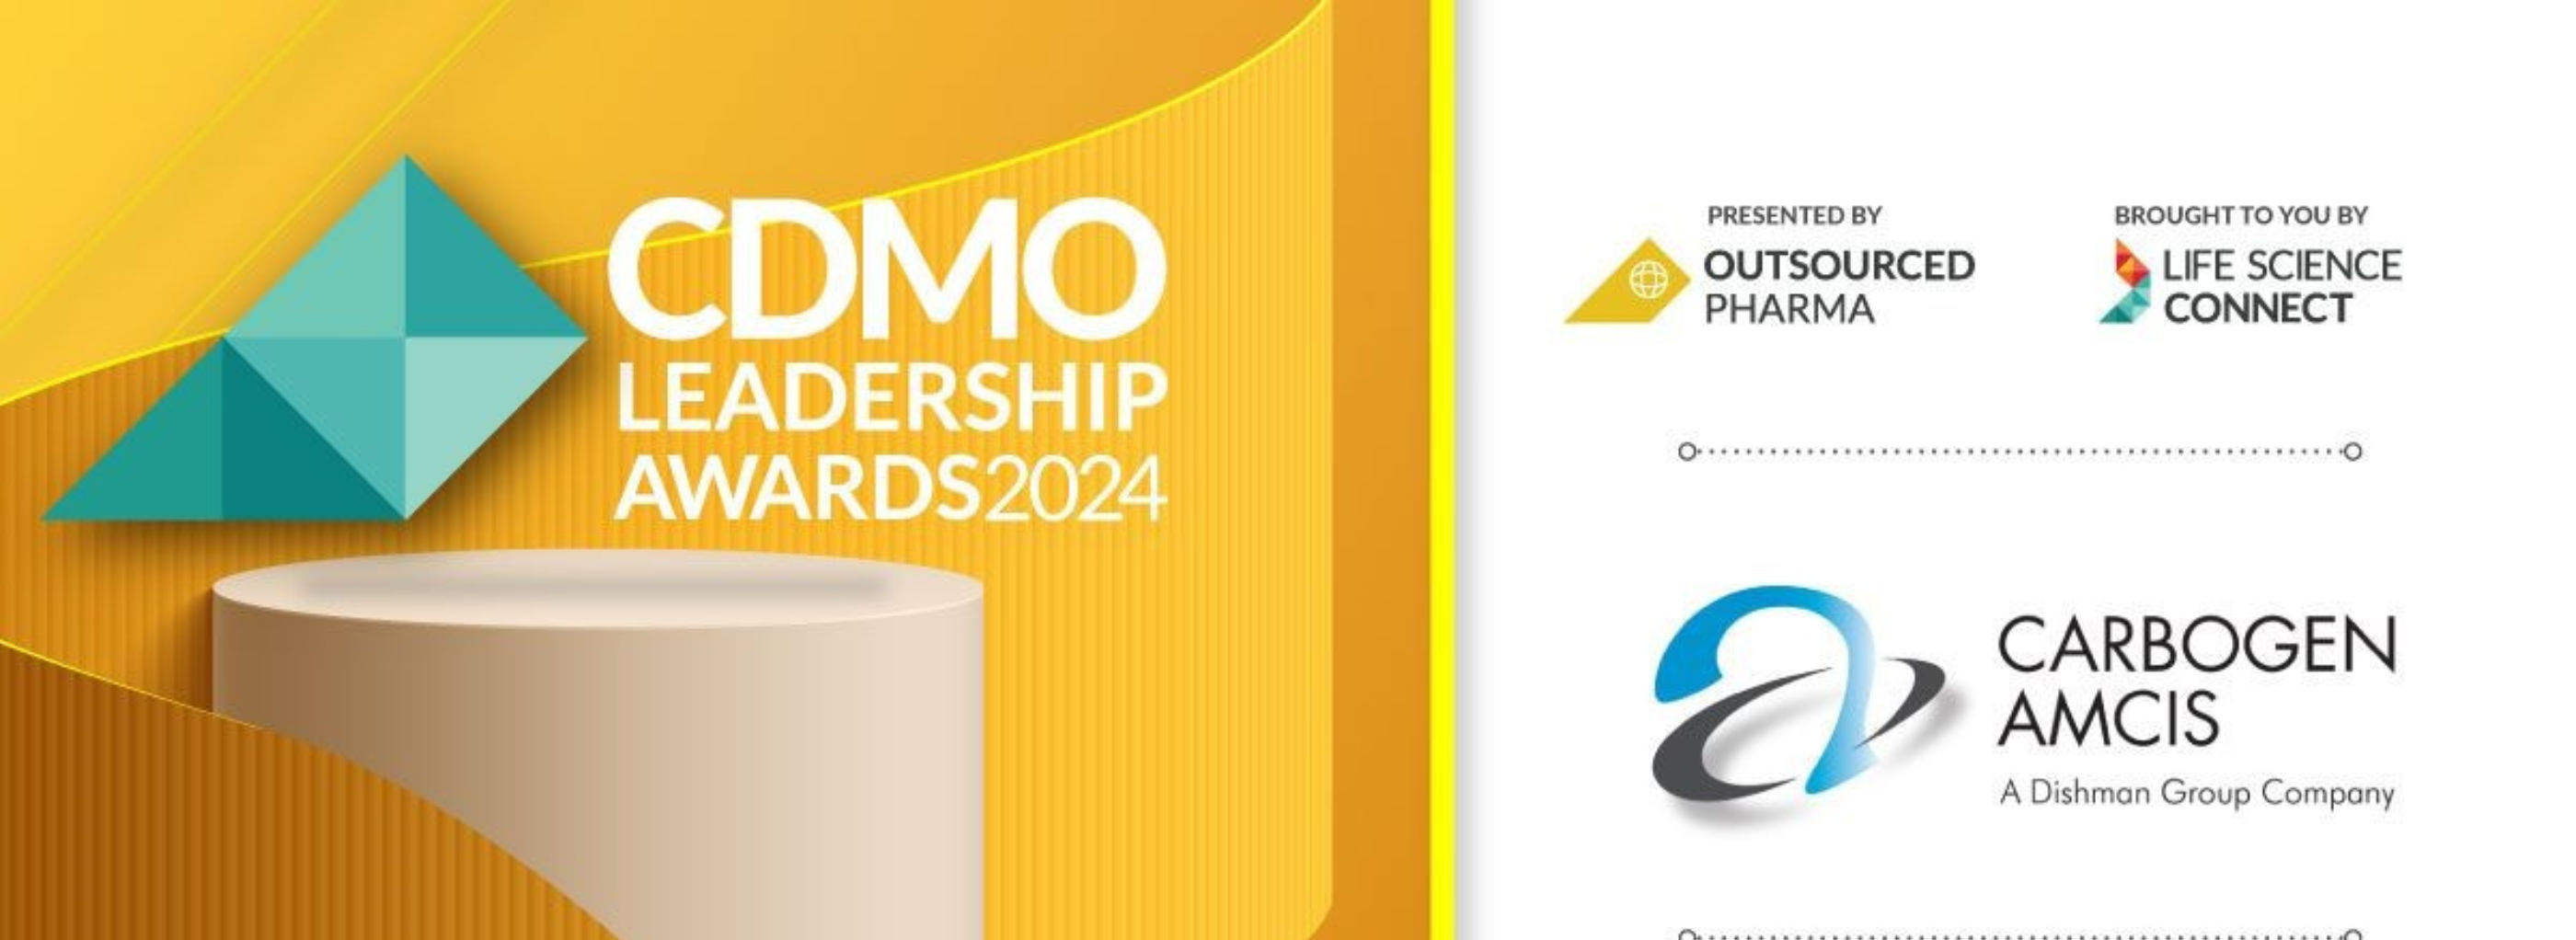 CARBOGEN AMCIS receives CDMO Leadership Awards 2024